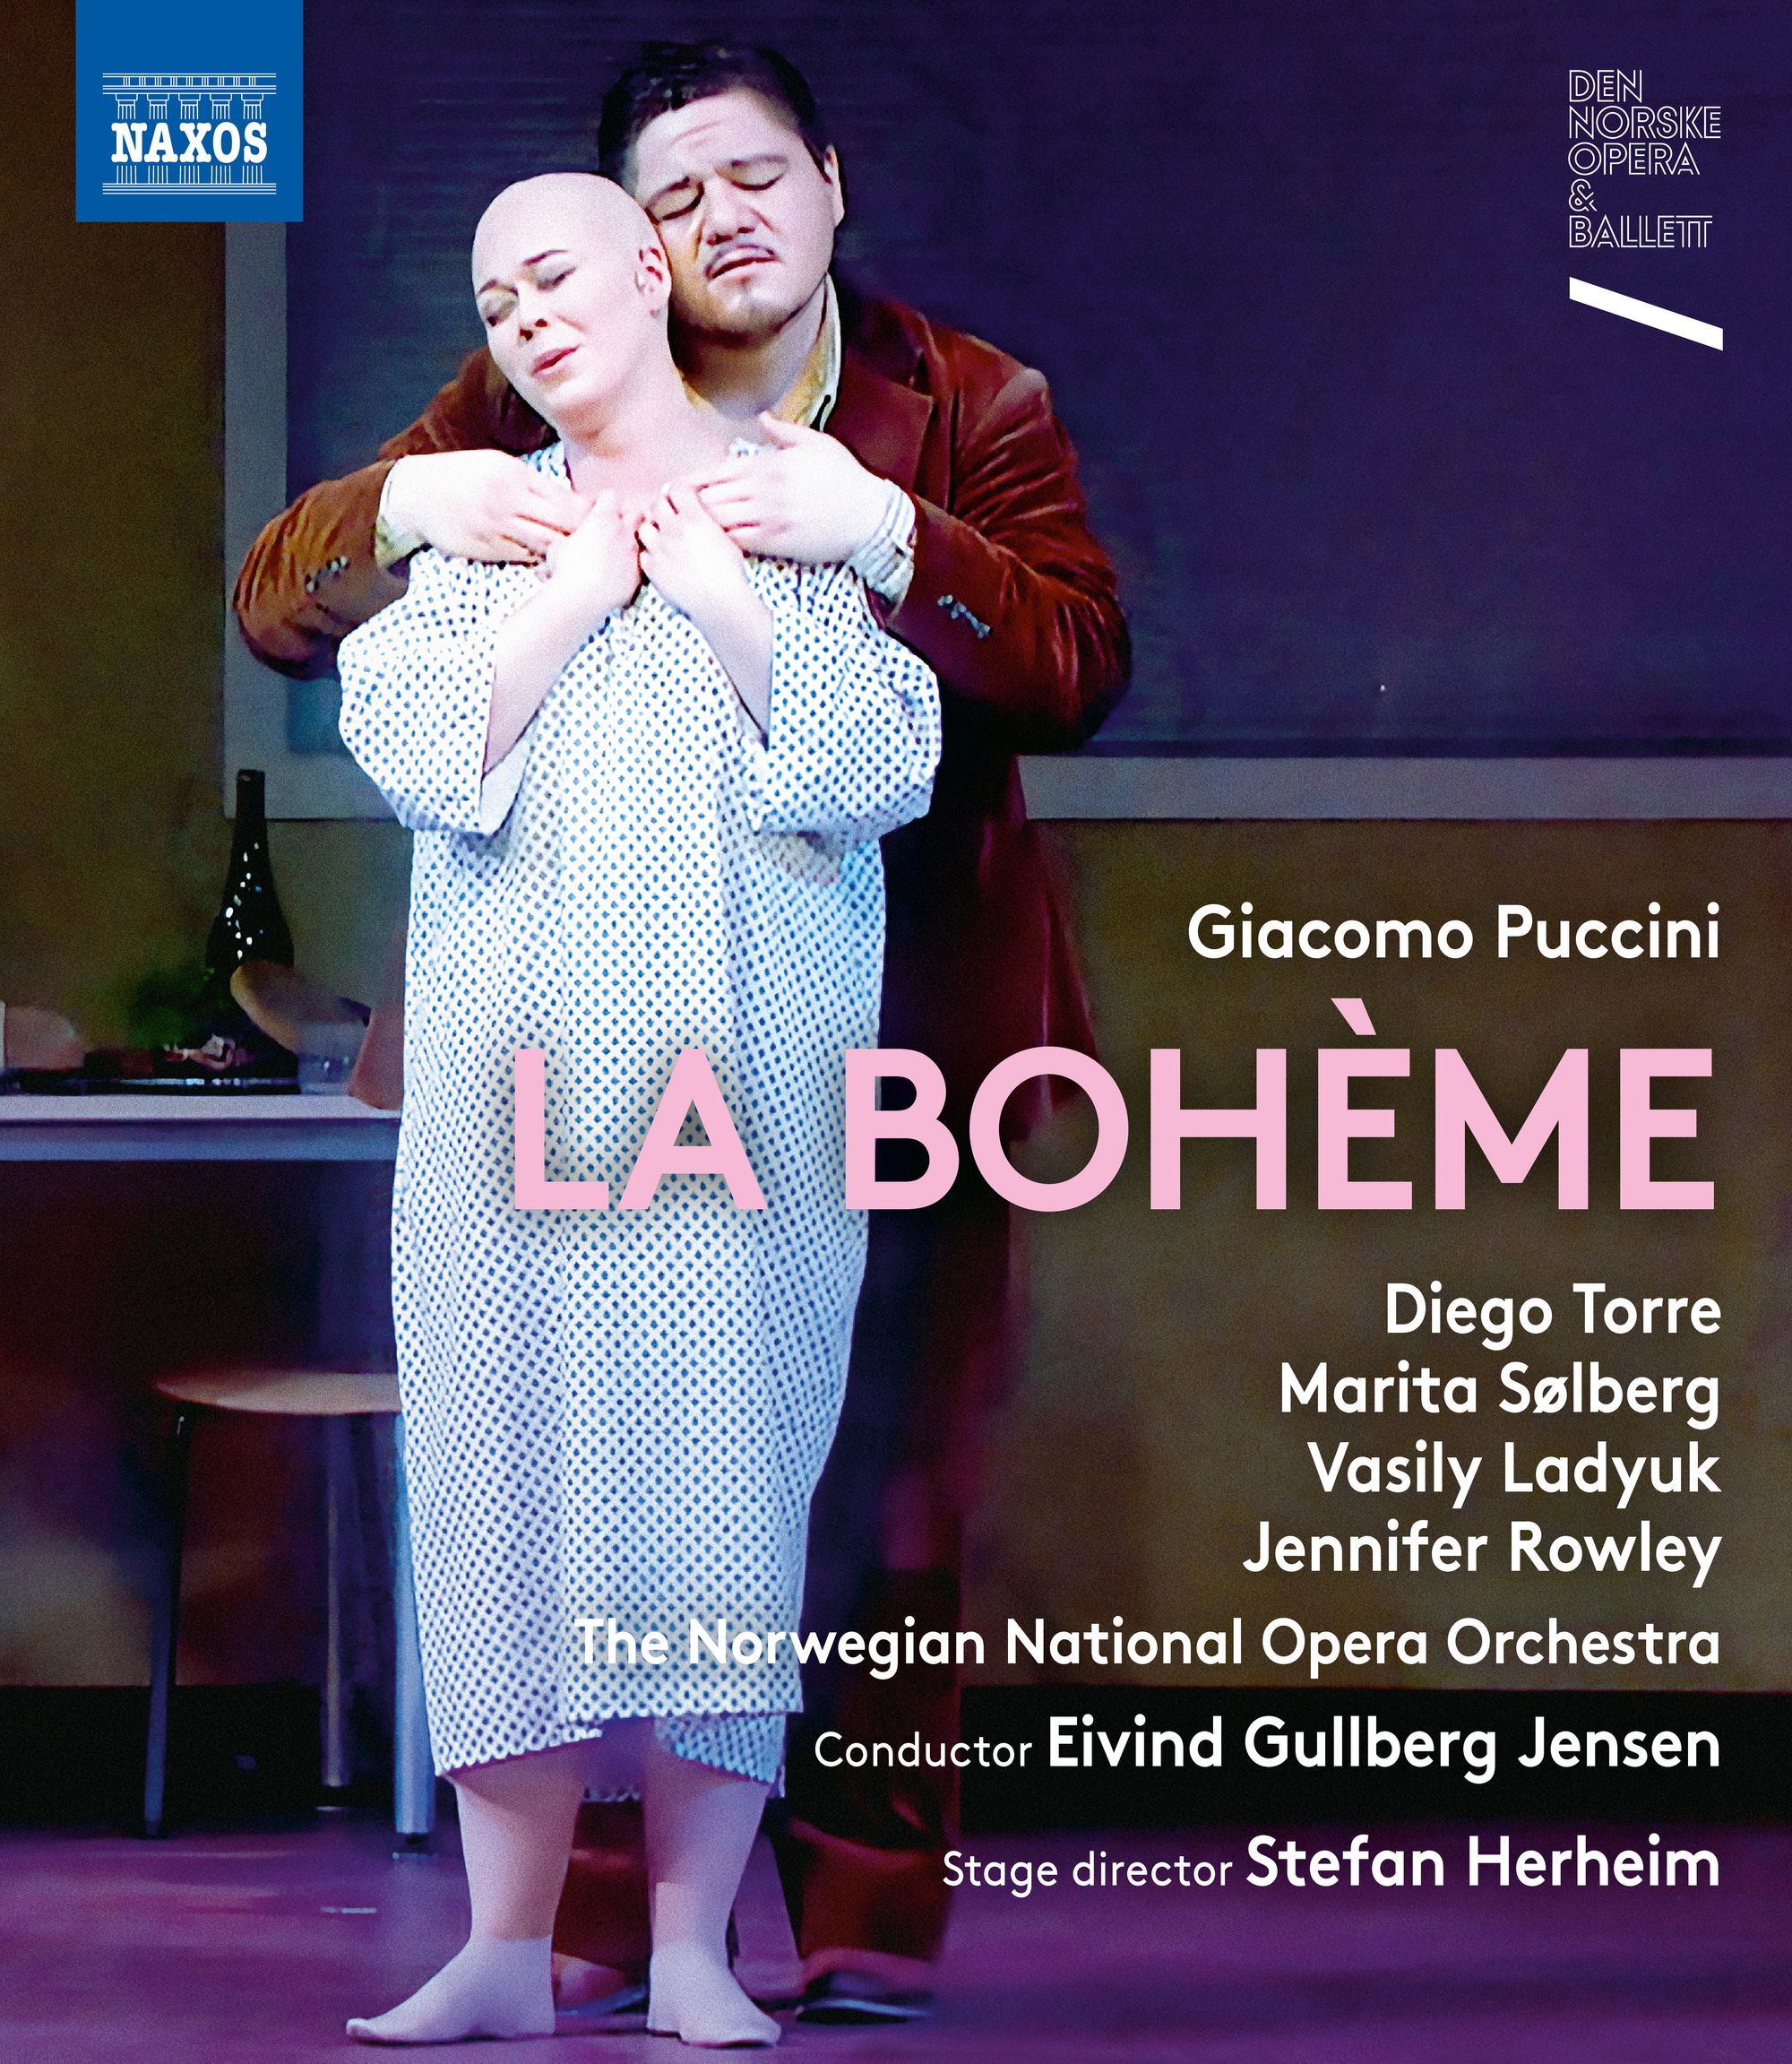 Puccini's La bohème directed by Stefan Herheim